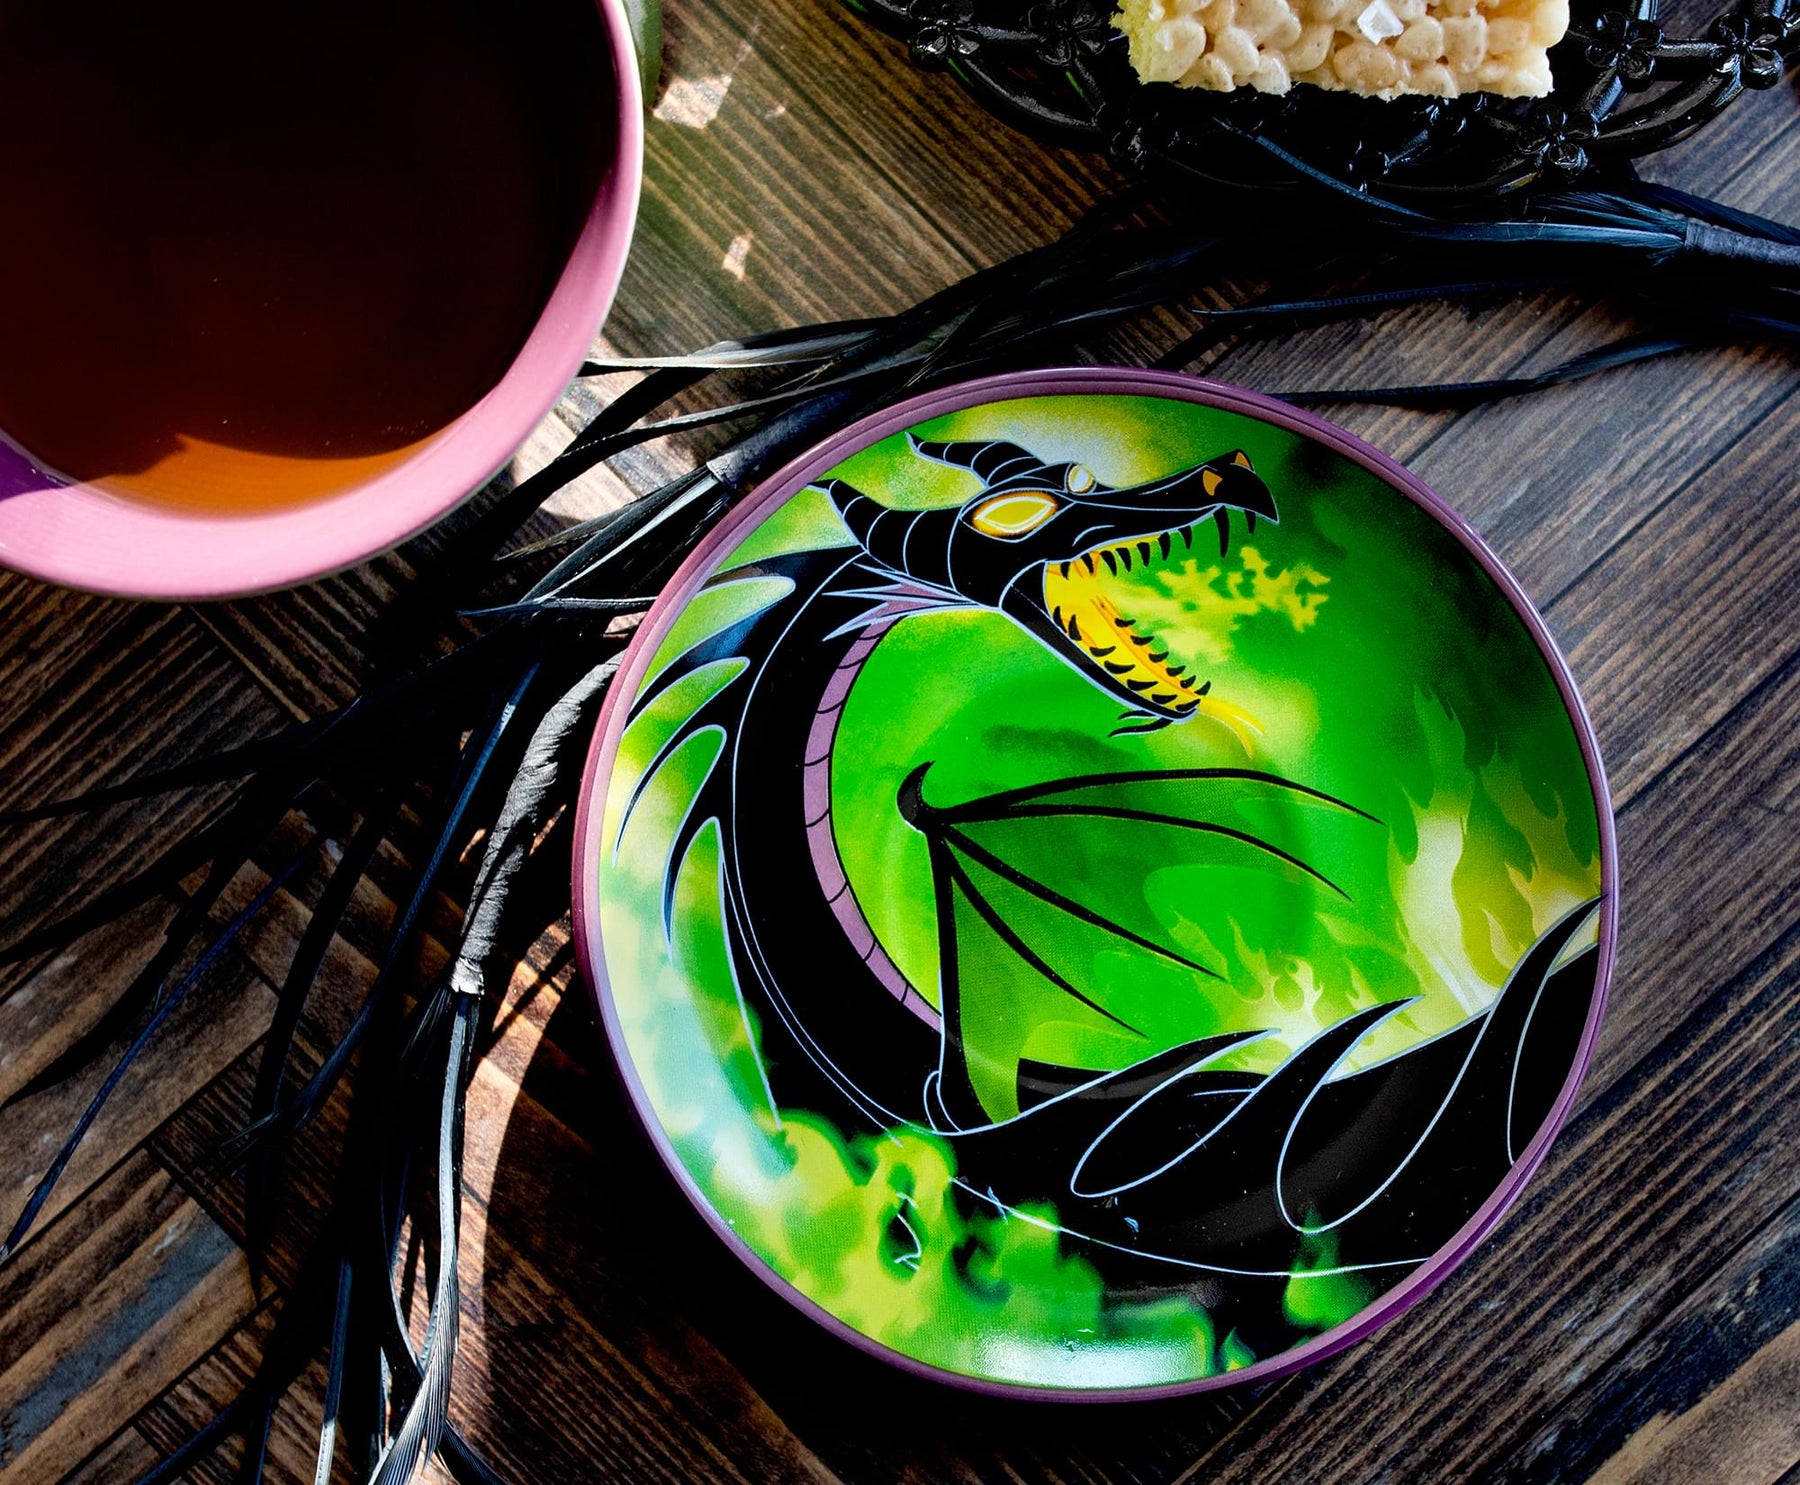 Disney Villains Maleficent Ceramic Teacup and Saucer Set